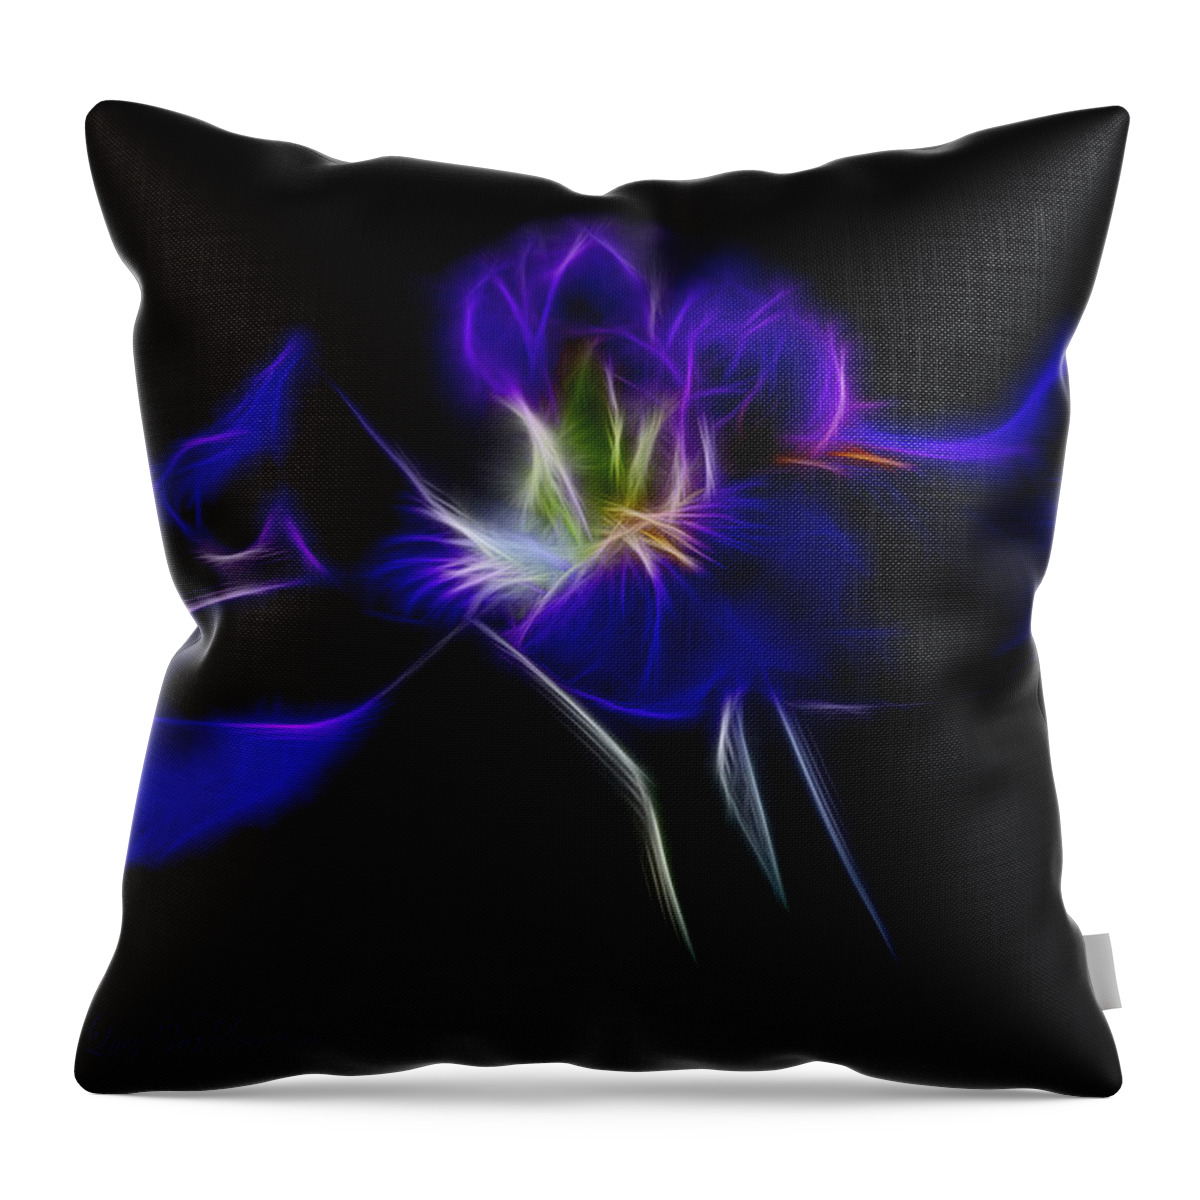 Iris Throw Pillow featuring the photograph Quasar Iris by Lucy VanSwearingen